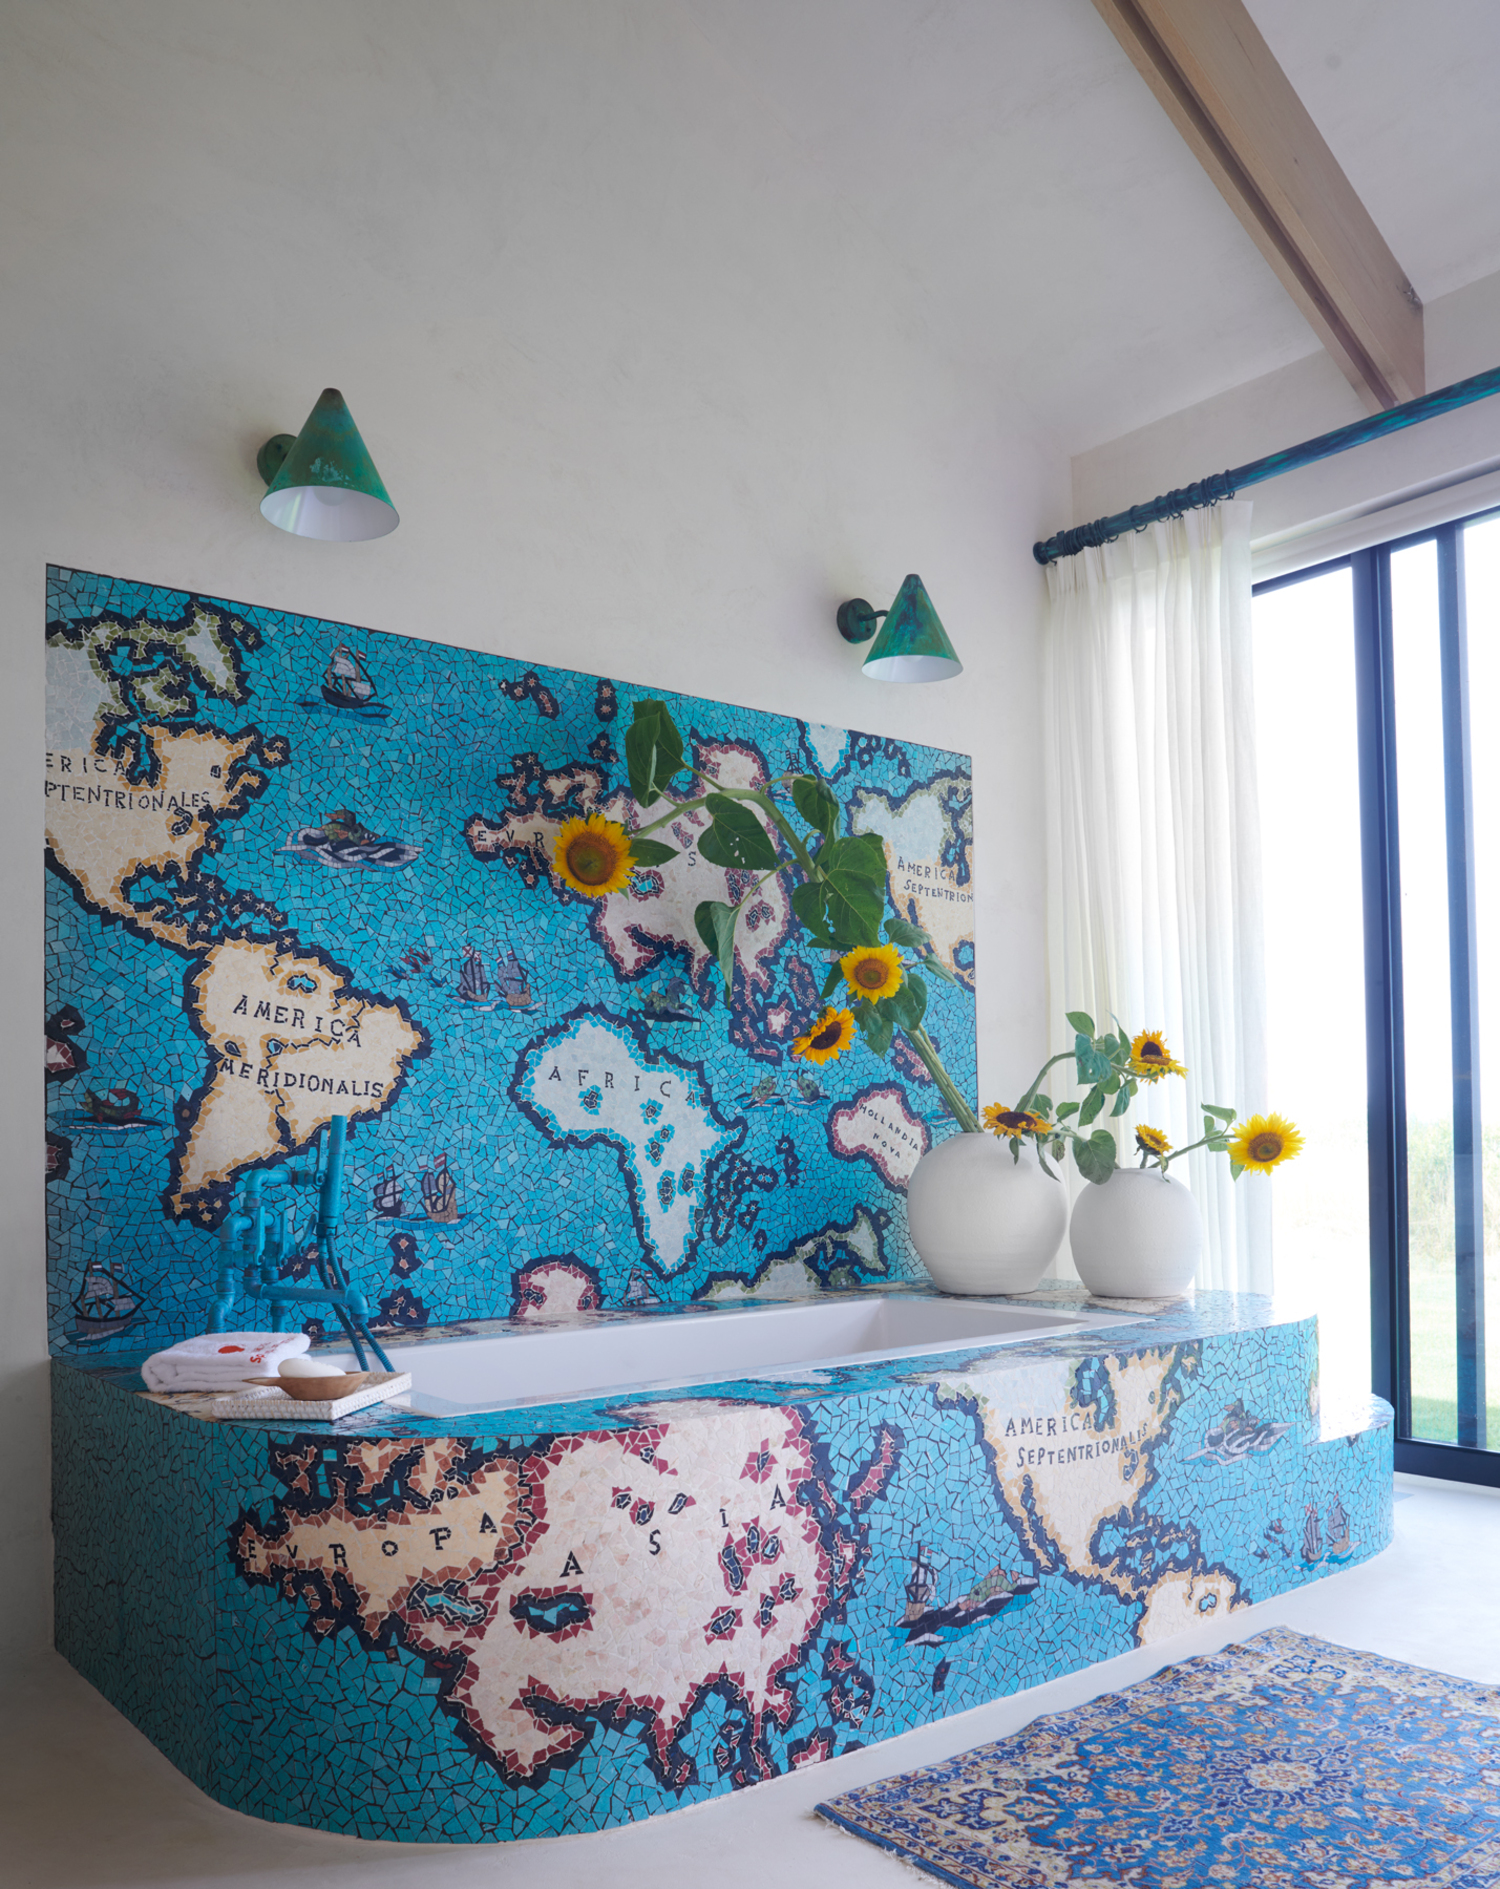 The primary bath has an extraordinary mosaic tub surround. WILLIAM WALDRON